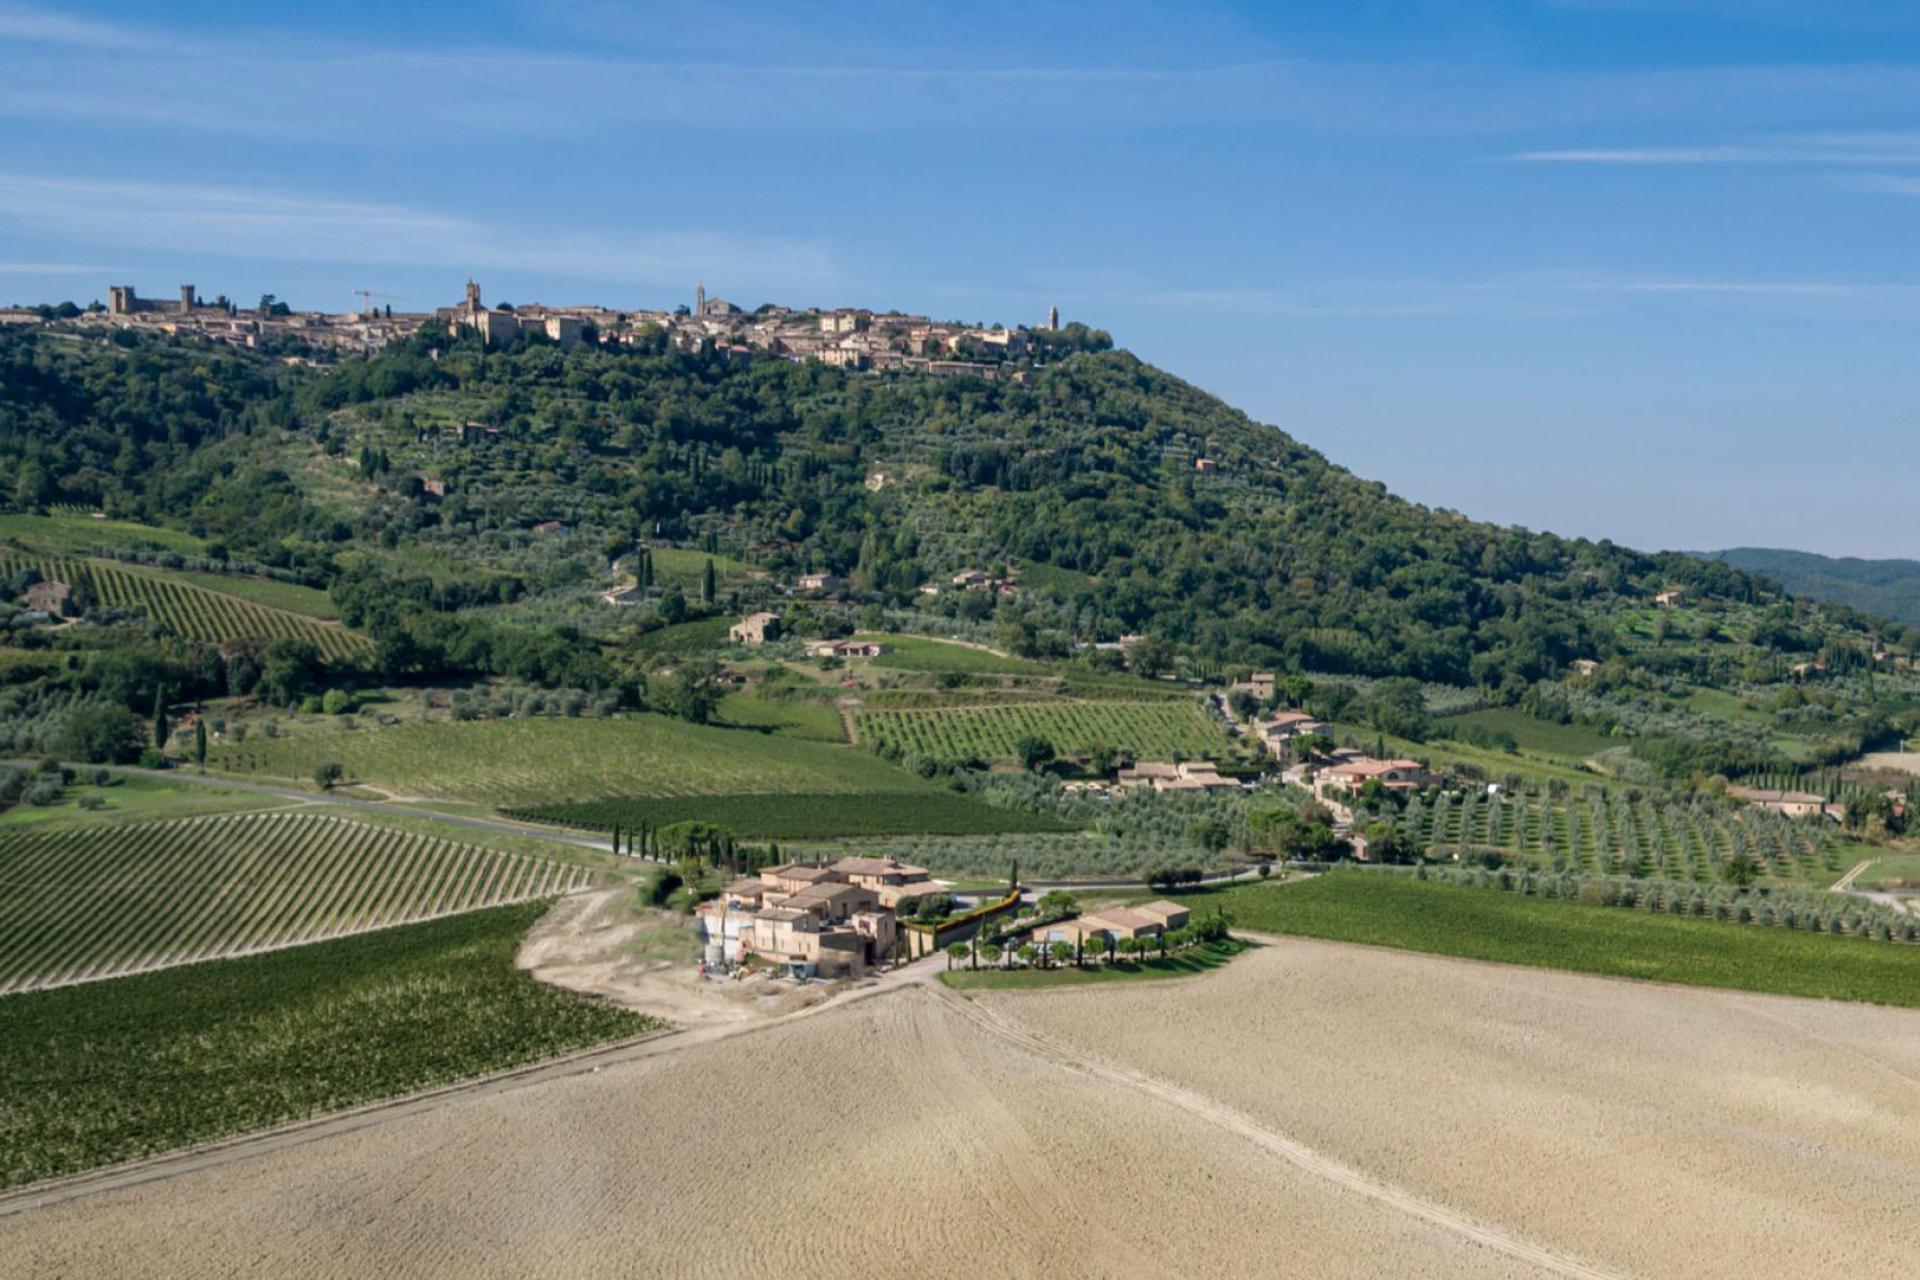 Agriturismo Toscane Luxe agriturismo Montalcino - tussen wijngaarden | myitaly.nl